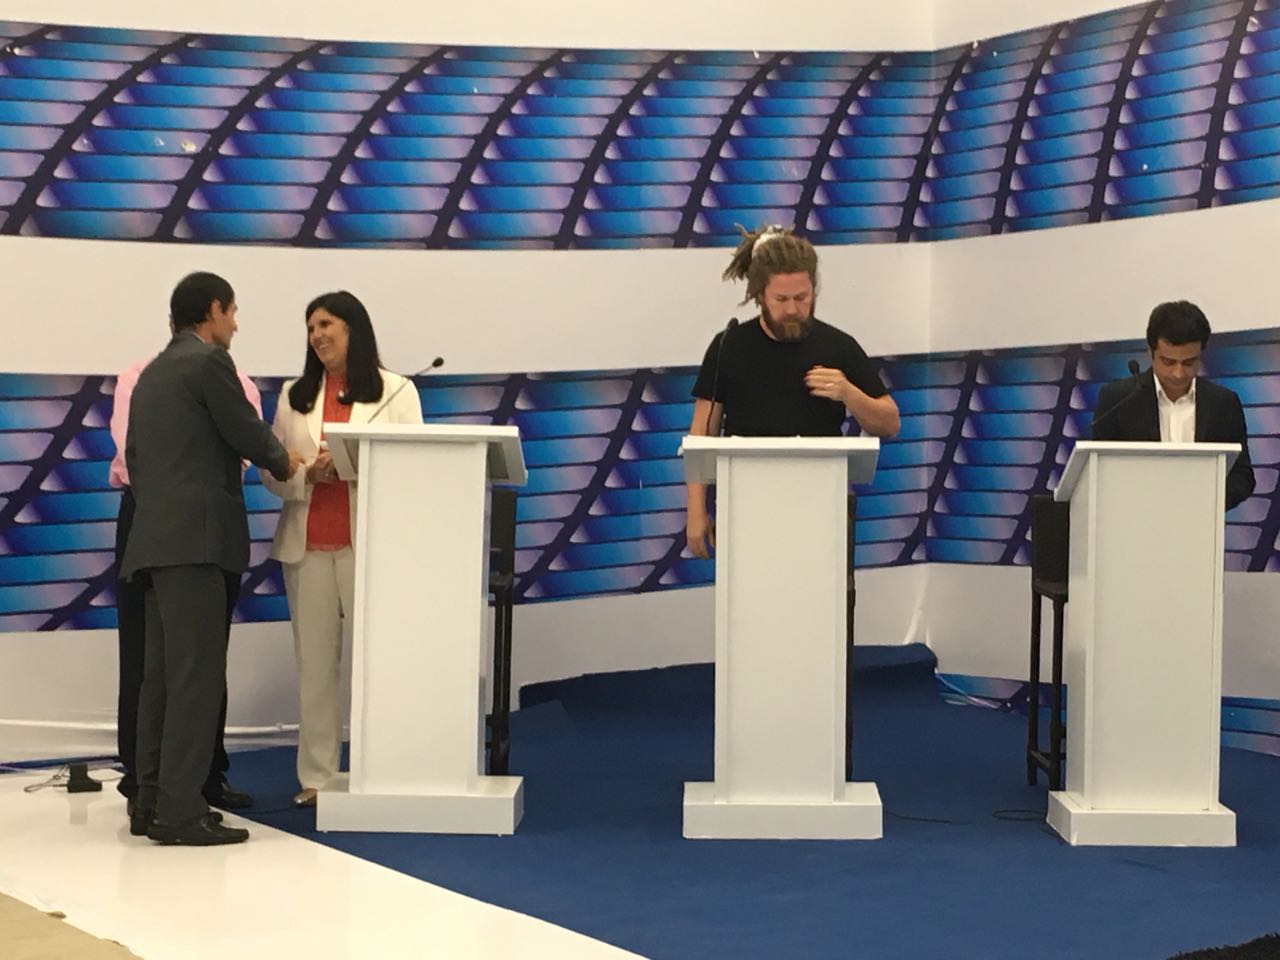 WhatsApp Image 2018 08 27 at 21.19.31 - DEBATE TV MASTER: saiba tudo que aconteceu na discussão entre os candidatos a vice-governador da Paraíba